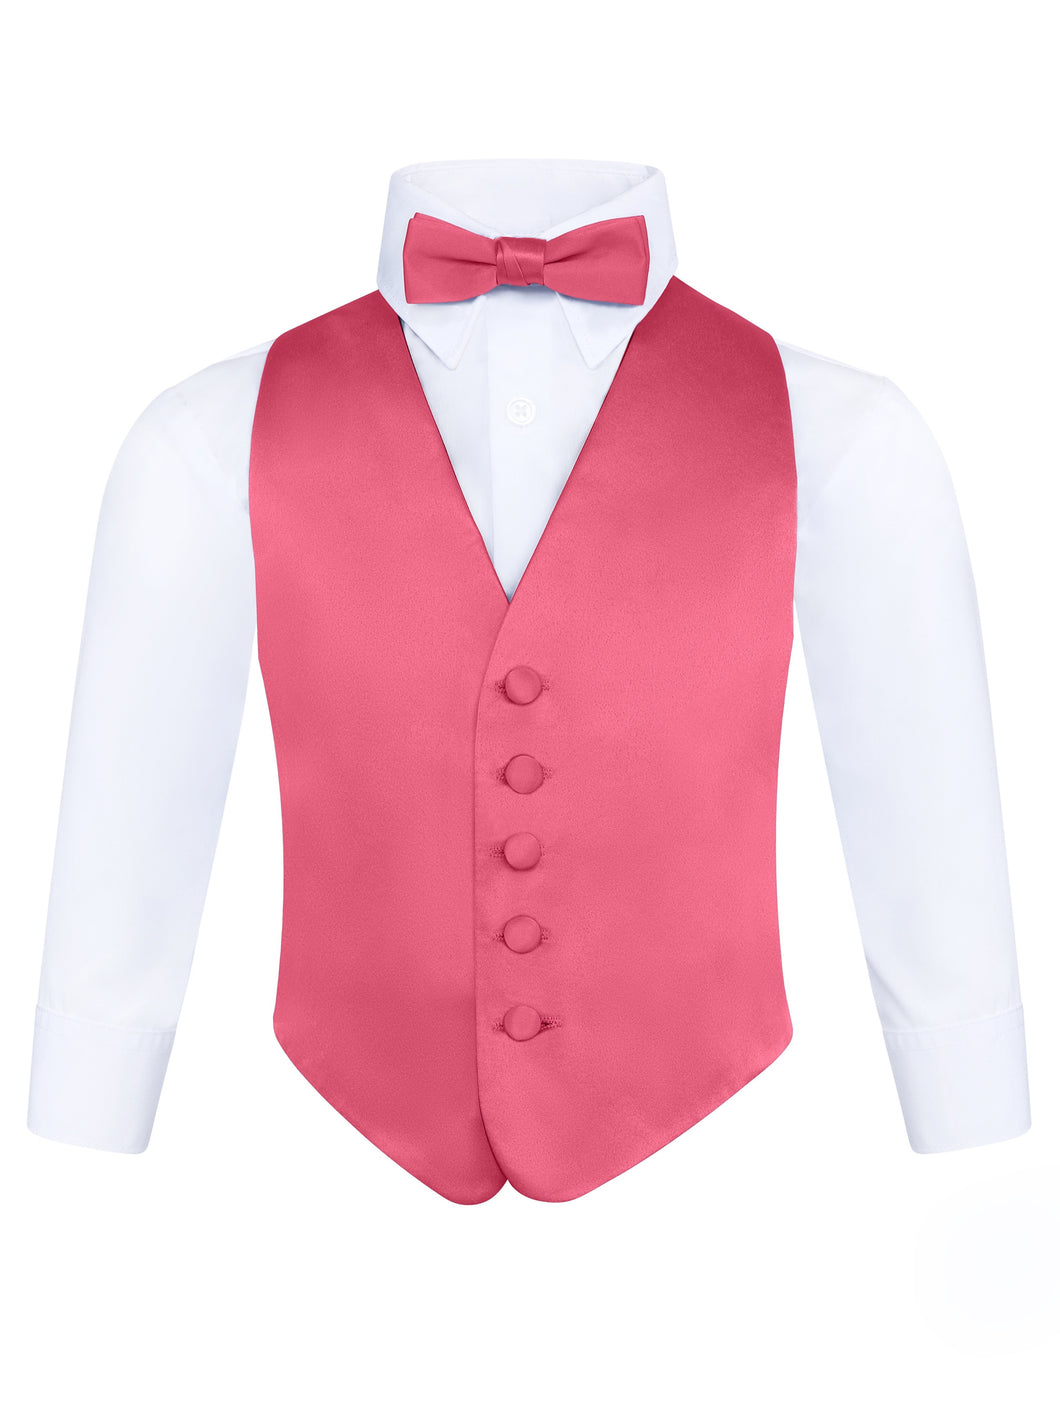 S.H. Churchill & Co. Boy's 3 Piece Fuchsia Backless Formal Vest Set - Includes Vest, Bow Tie, Pocket Square for Tuxedo or Suit